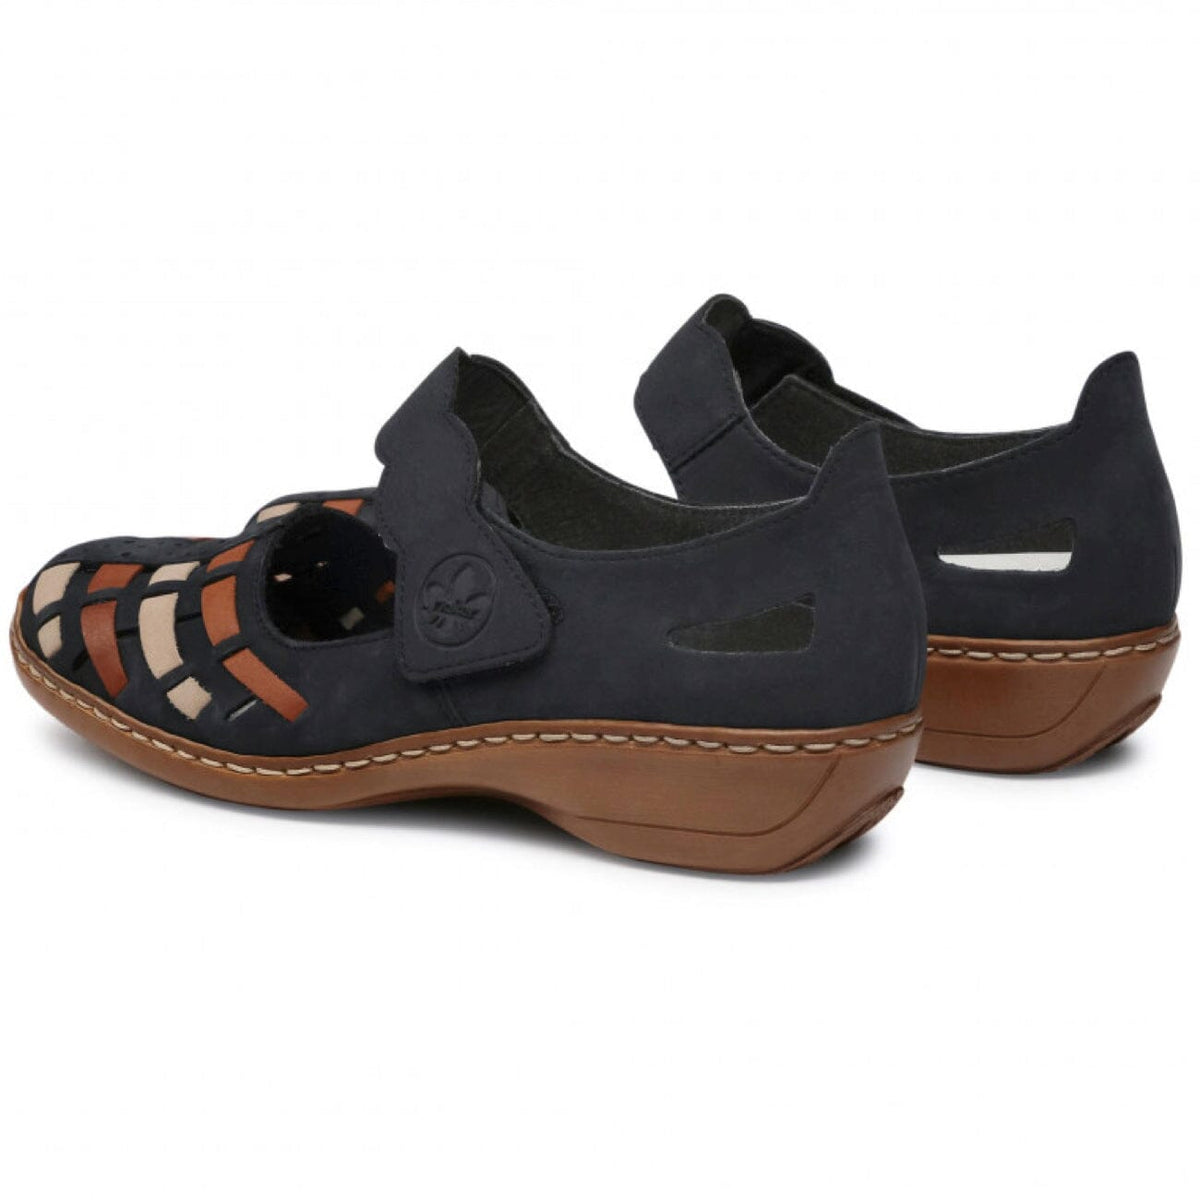 Rieker, Pazifik, Shoe, Leather, Navy/Brown/Beige Shoes Rieker 